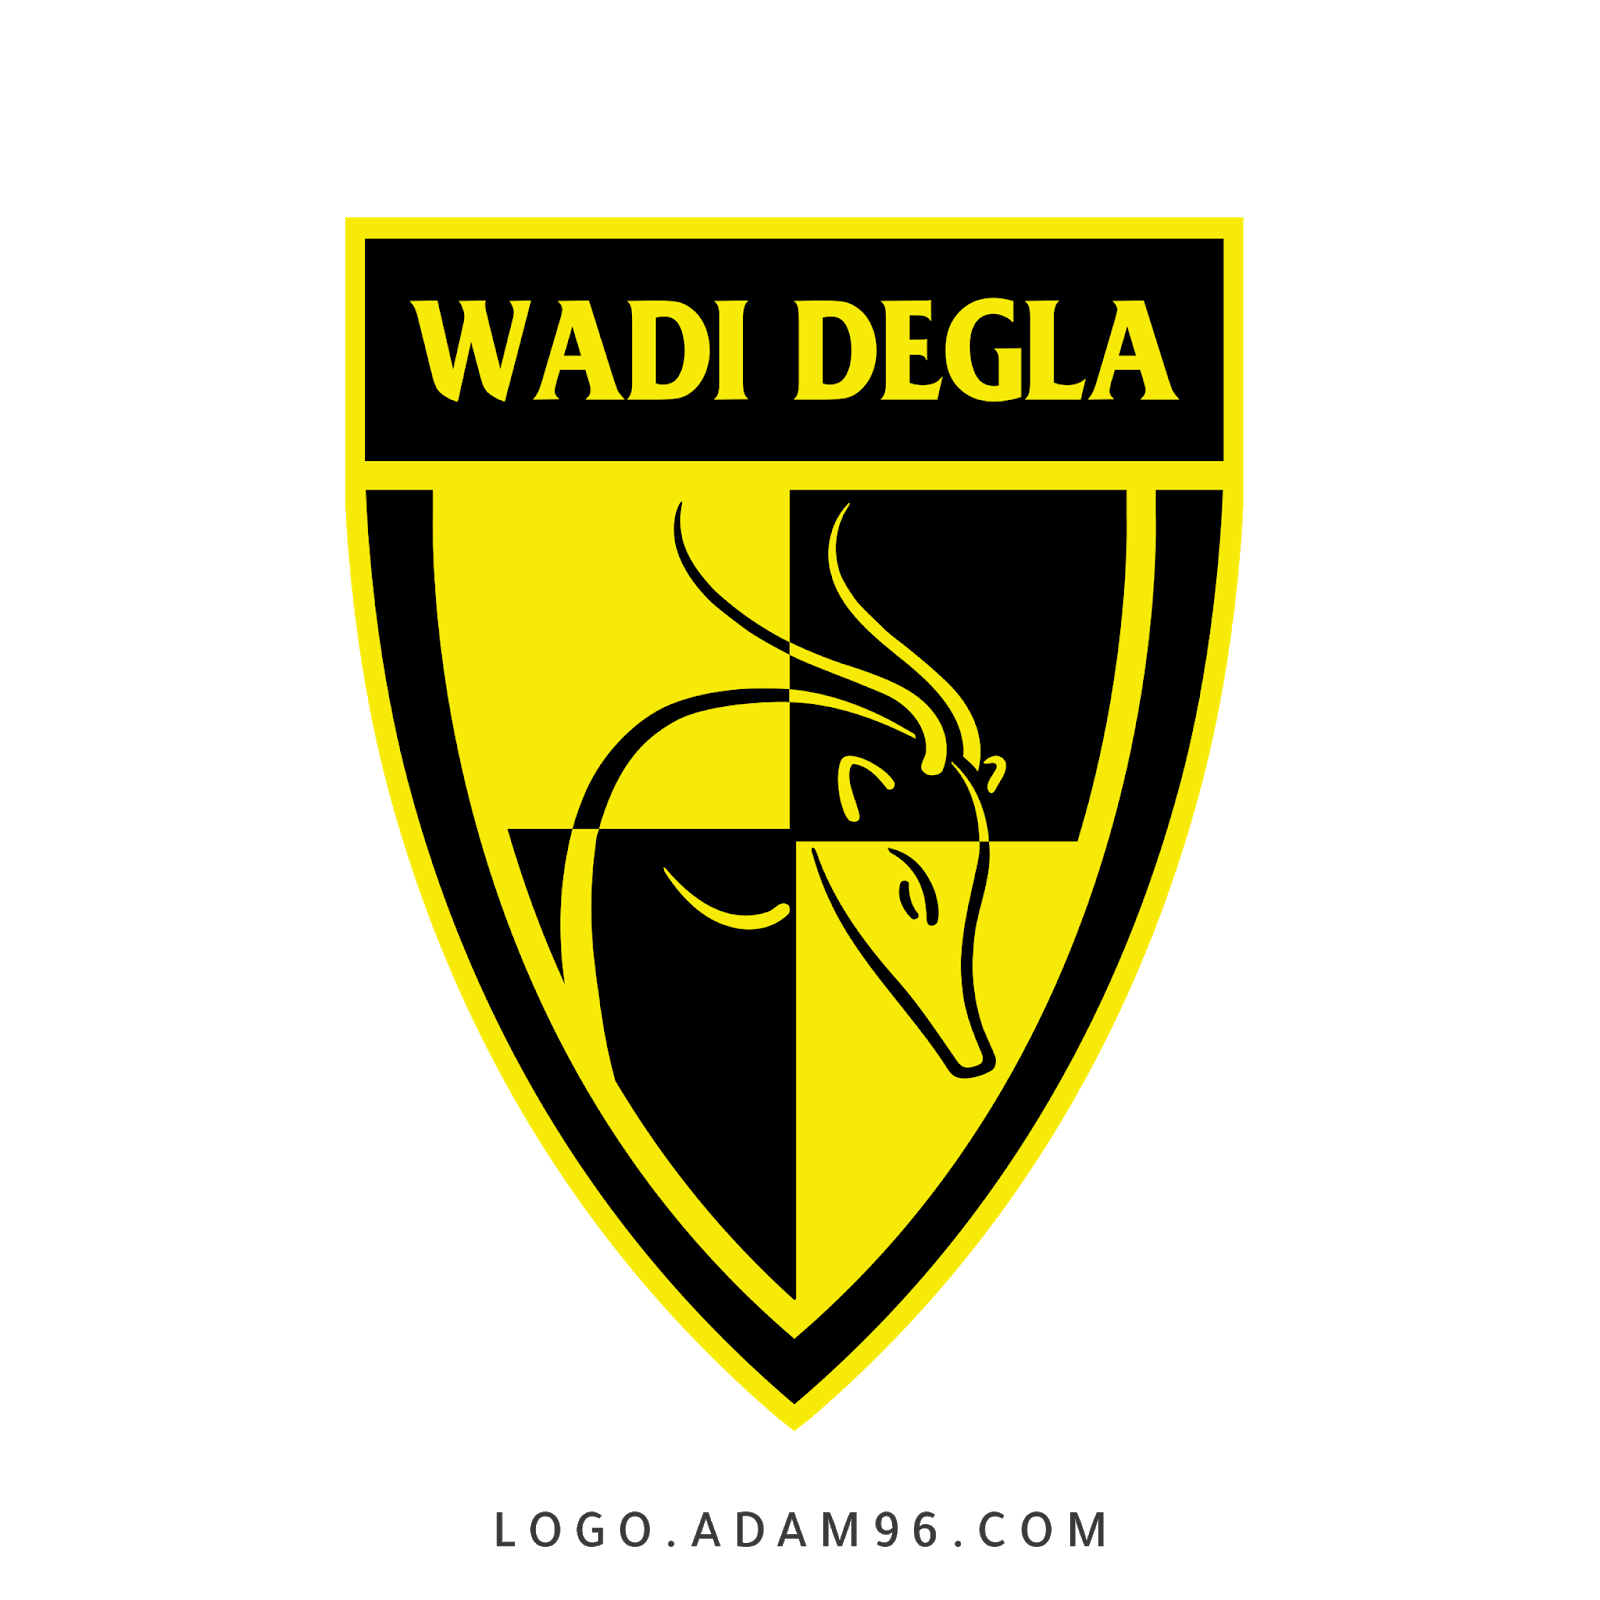 Wadi Degla Clubs Company